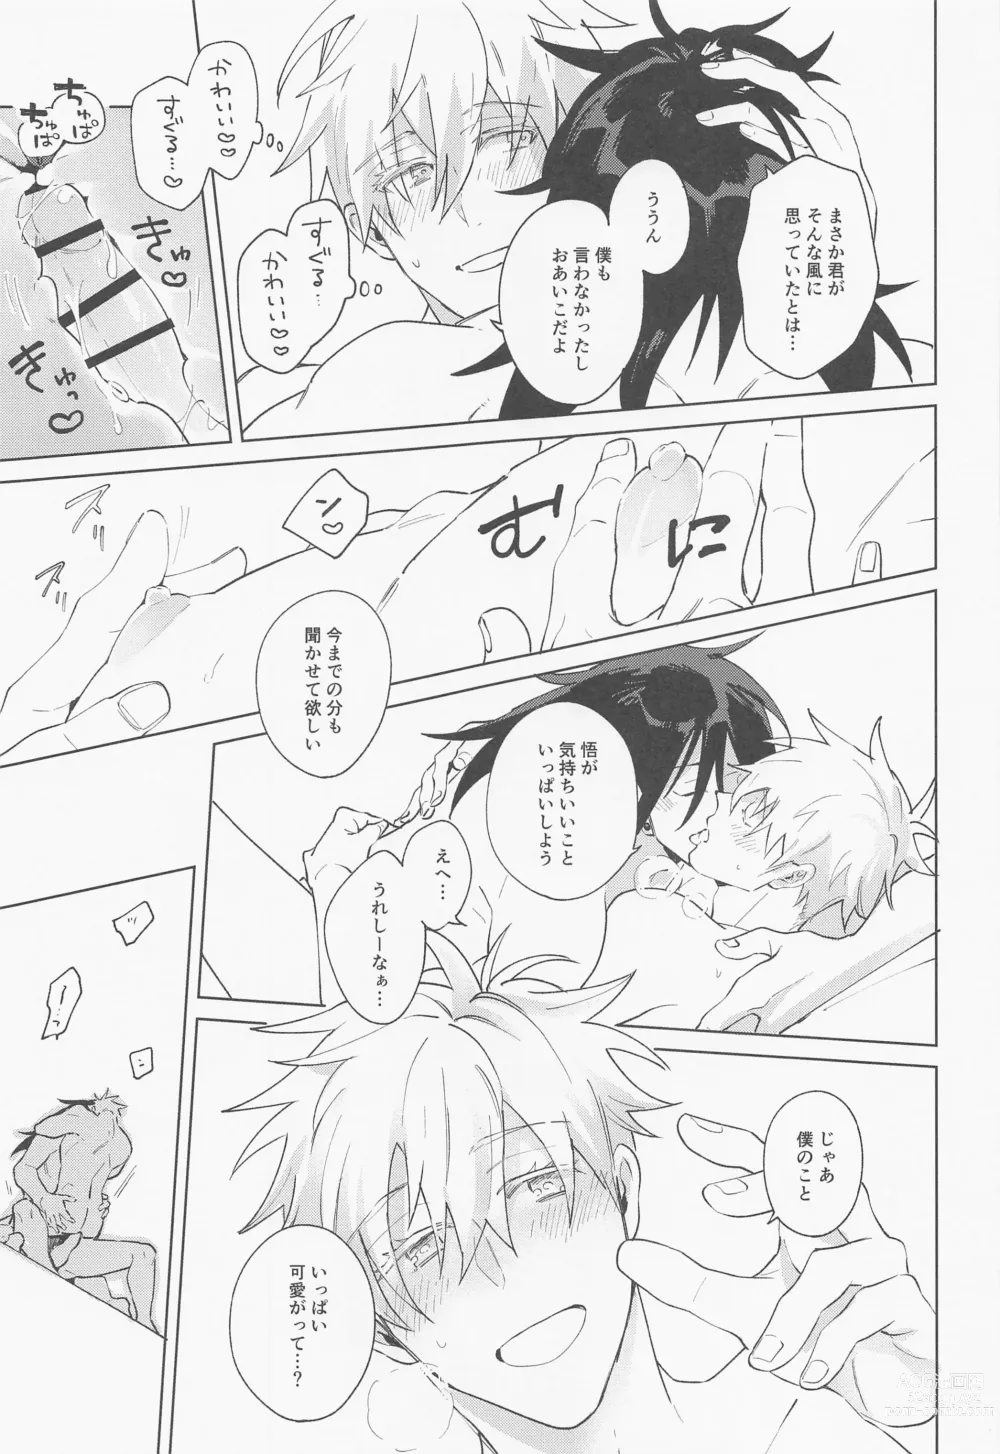 Page 56 of doujinshi Say you love me!